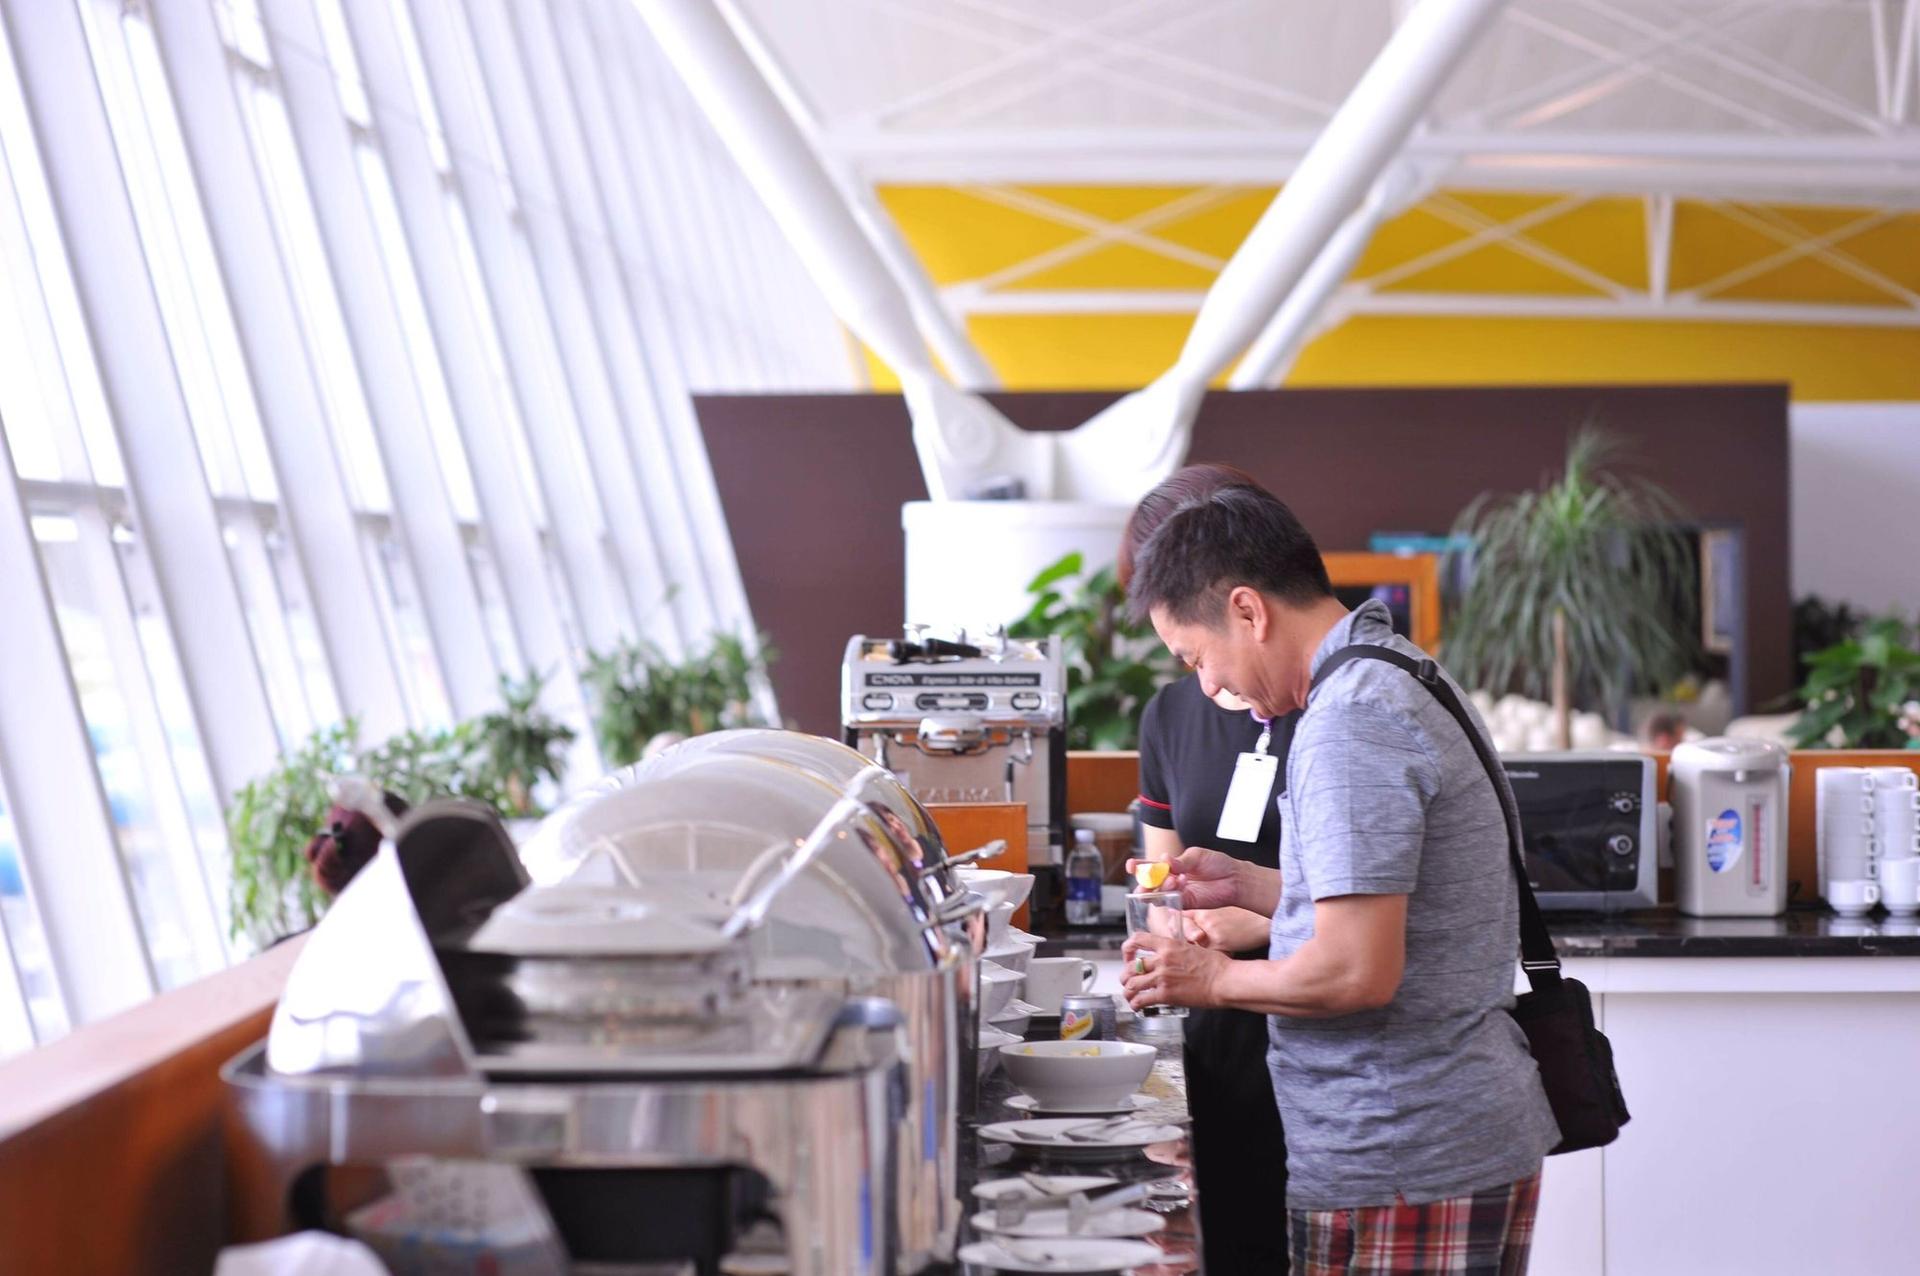 Noi Bai International Airport Business Lounge image 19 of 26